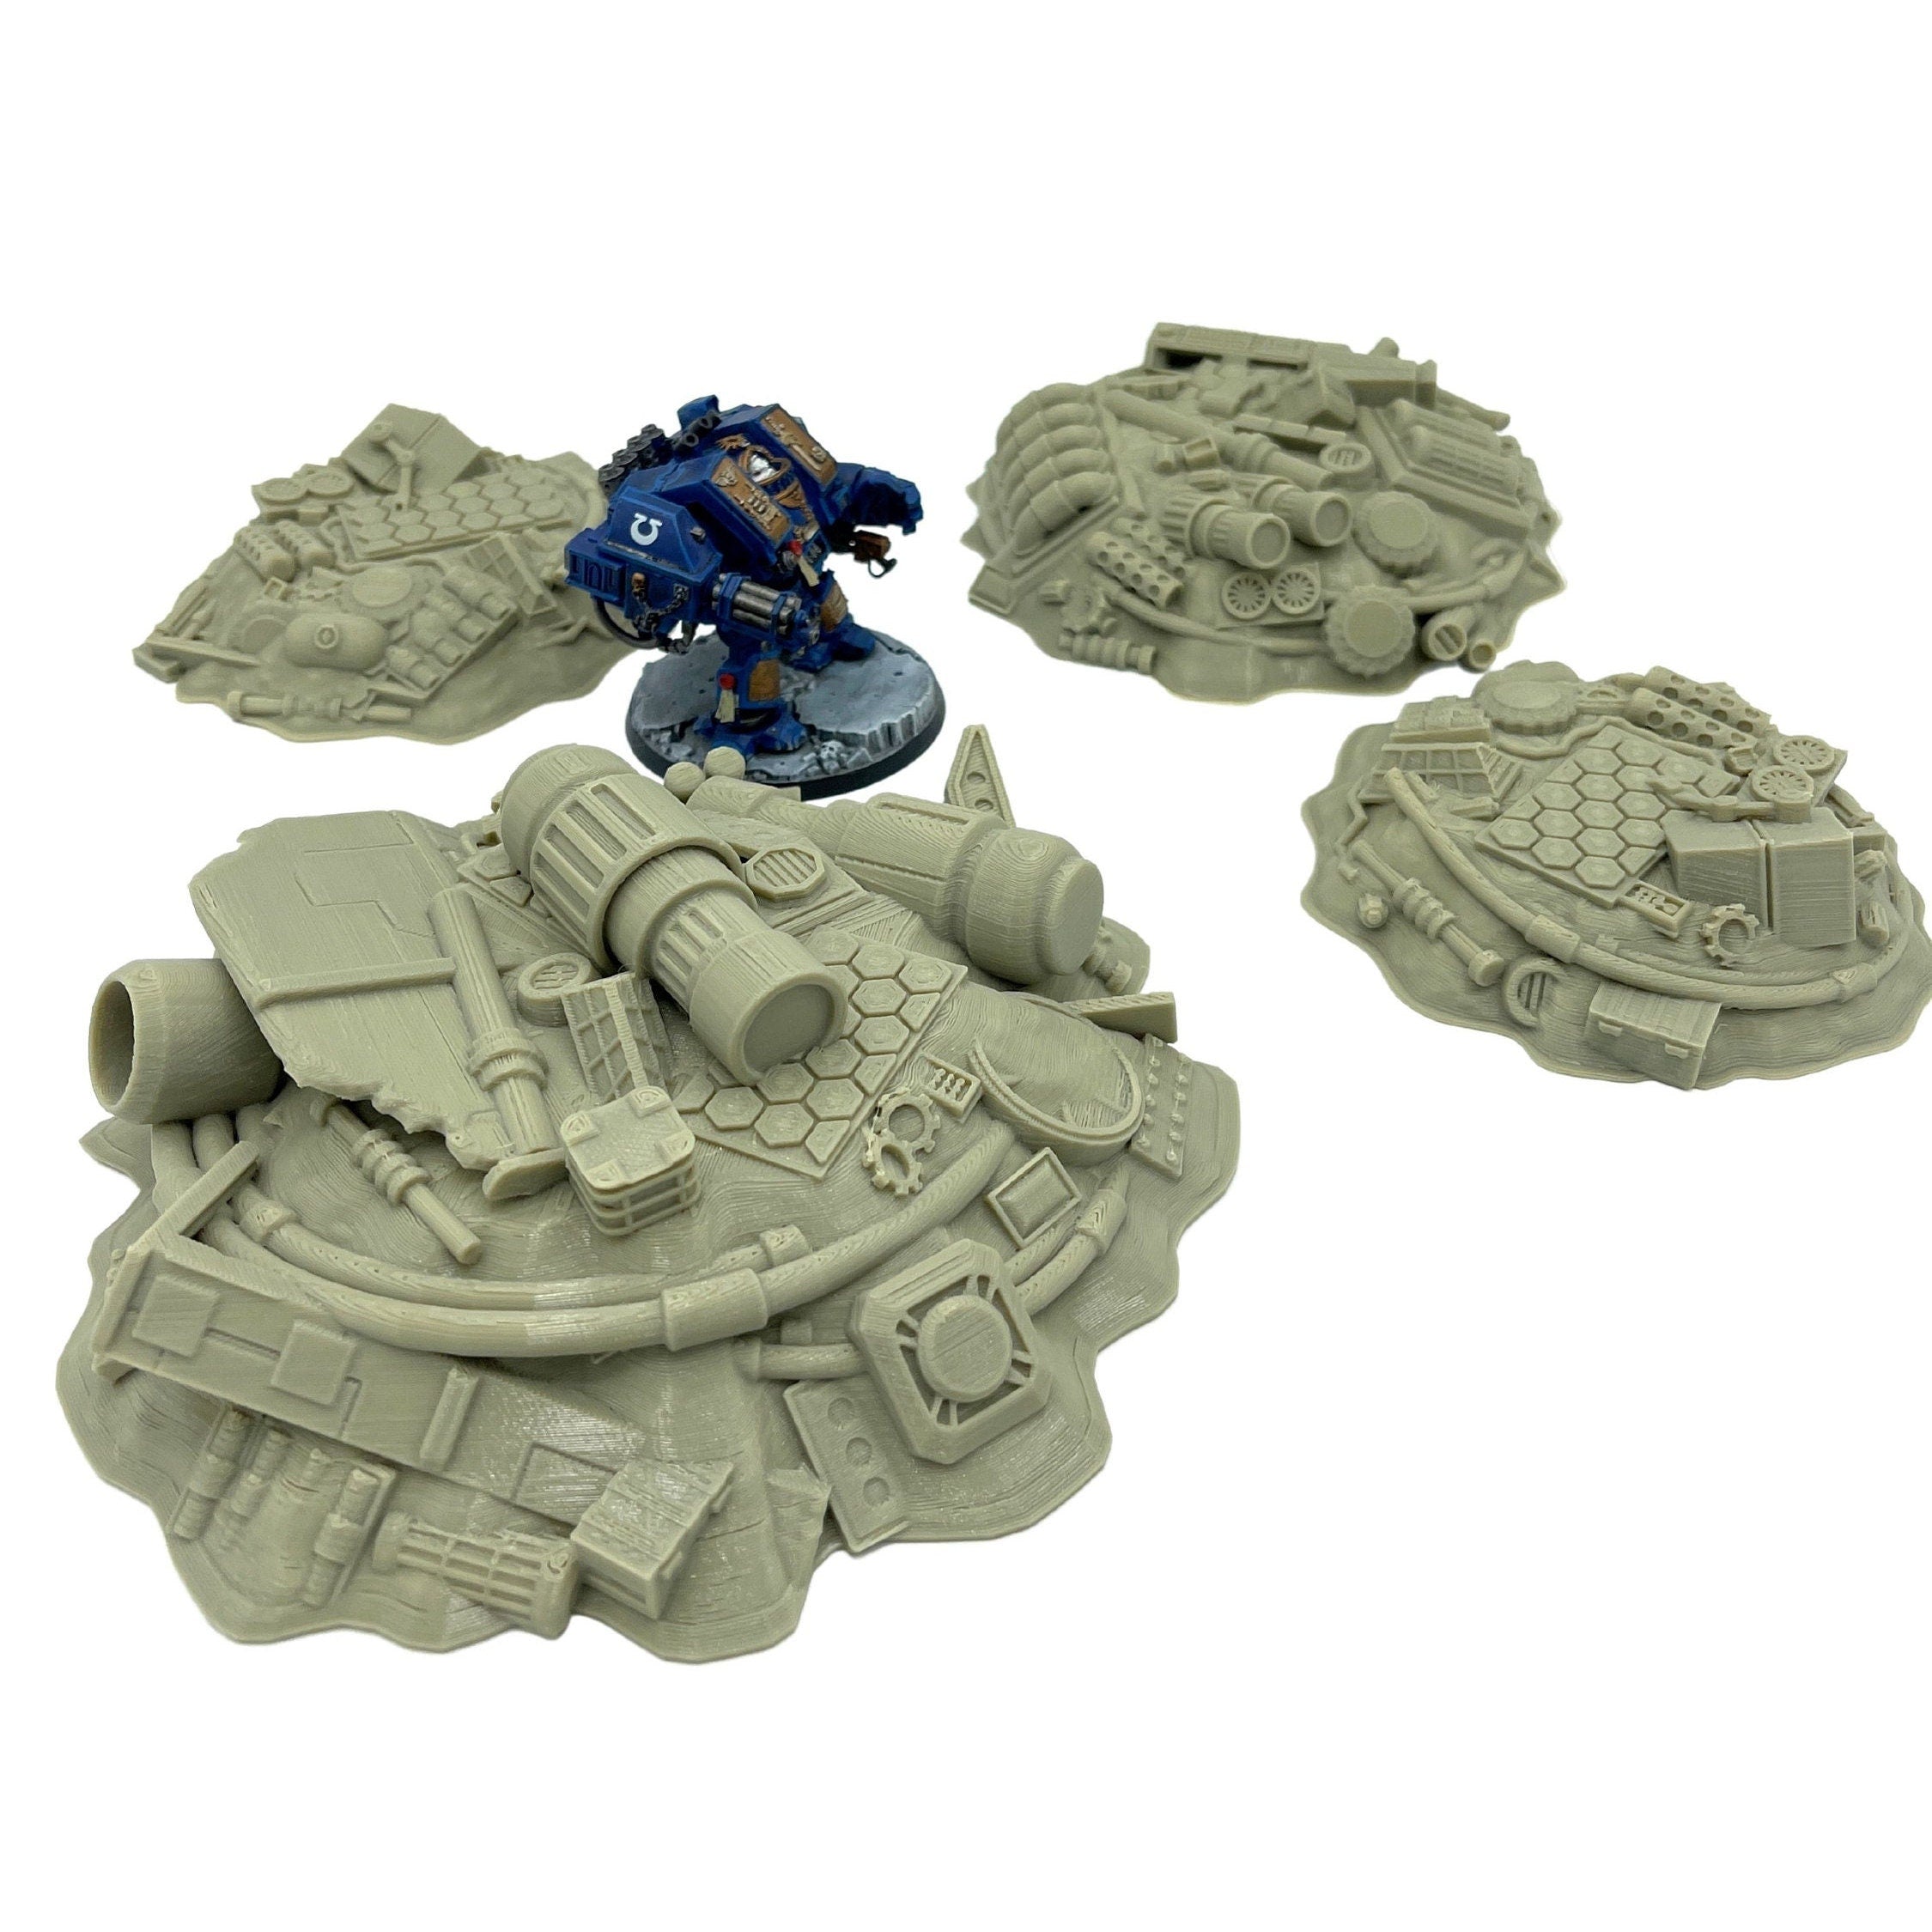 3d Printed / Sci-fi Junk Piles /Star Wars Legion Compatible Pack/ Corvus Games Terrain Licensed Printer / Print to Order